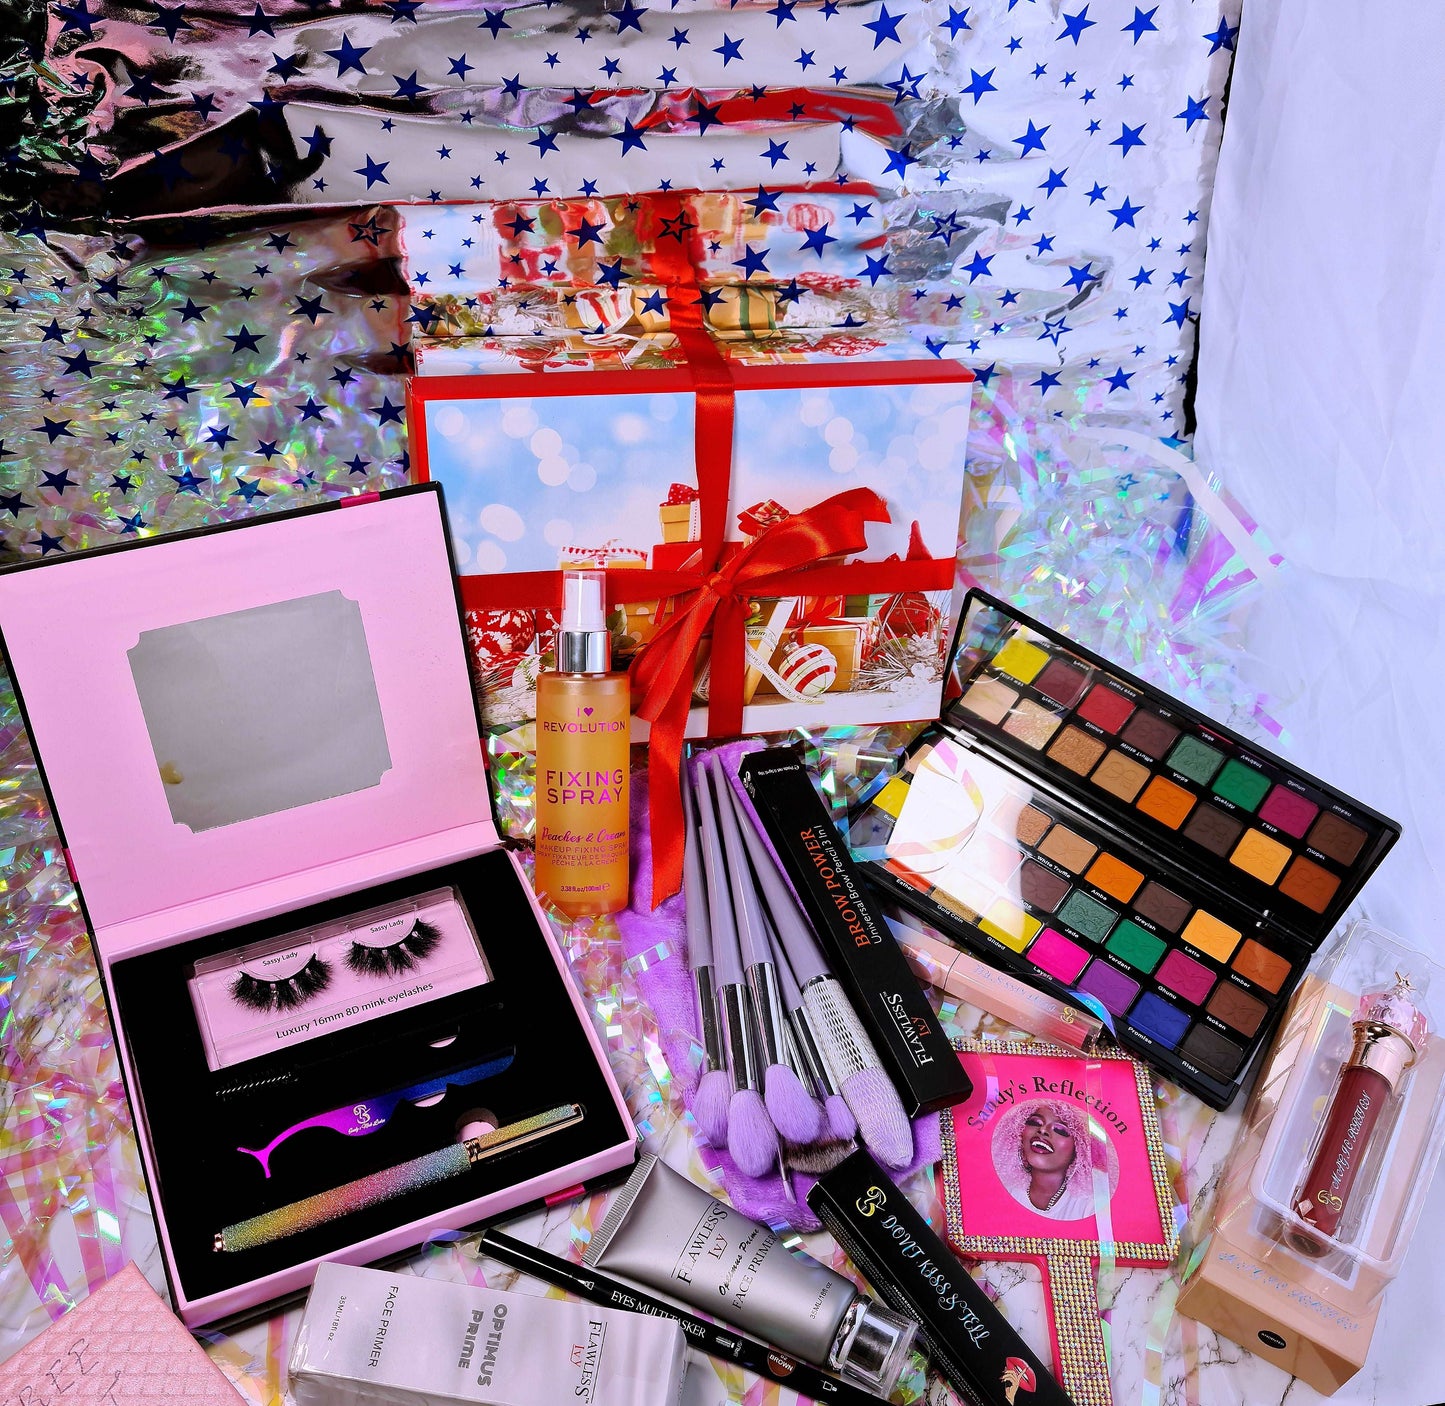 Christmas Platinum Gift Box ~ Regalo di Natale Platino - SANDY'S MAKEUP AND ARTISTRY 